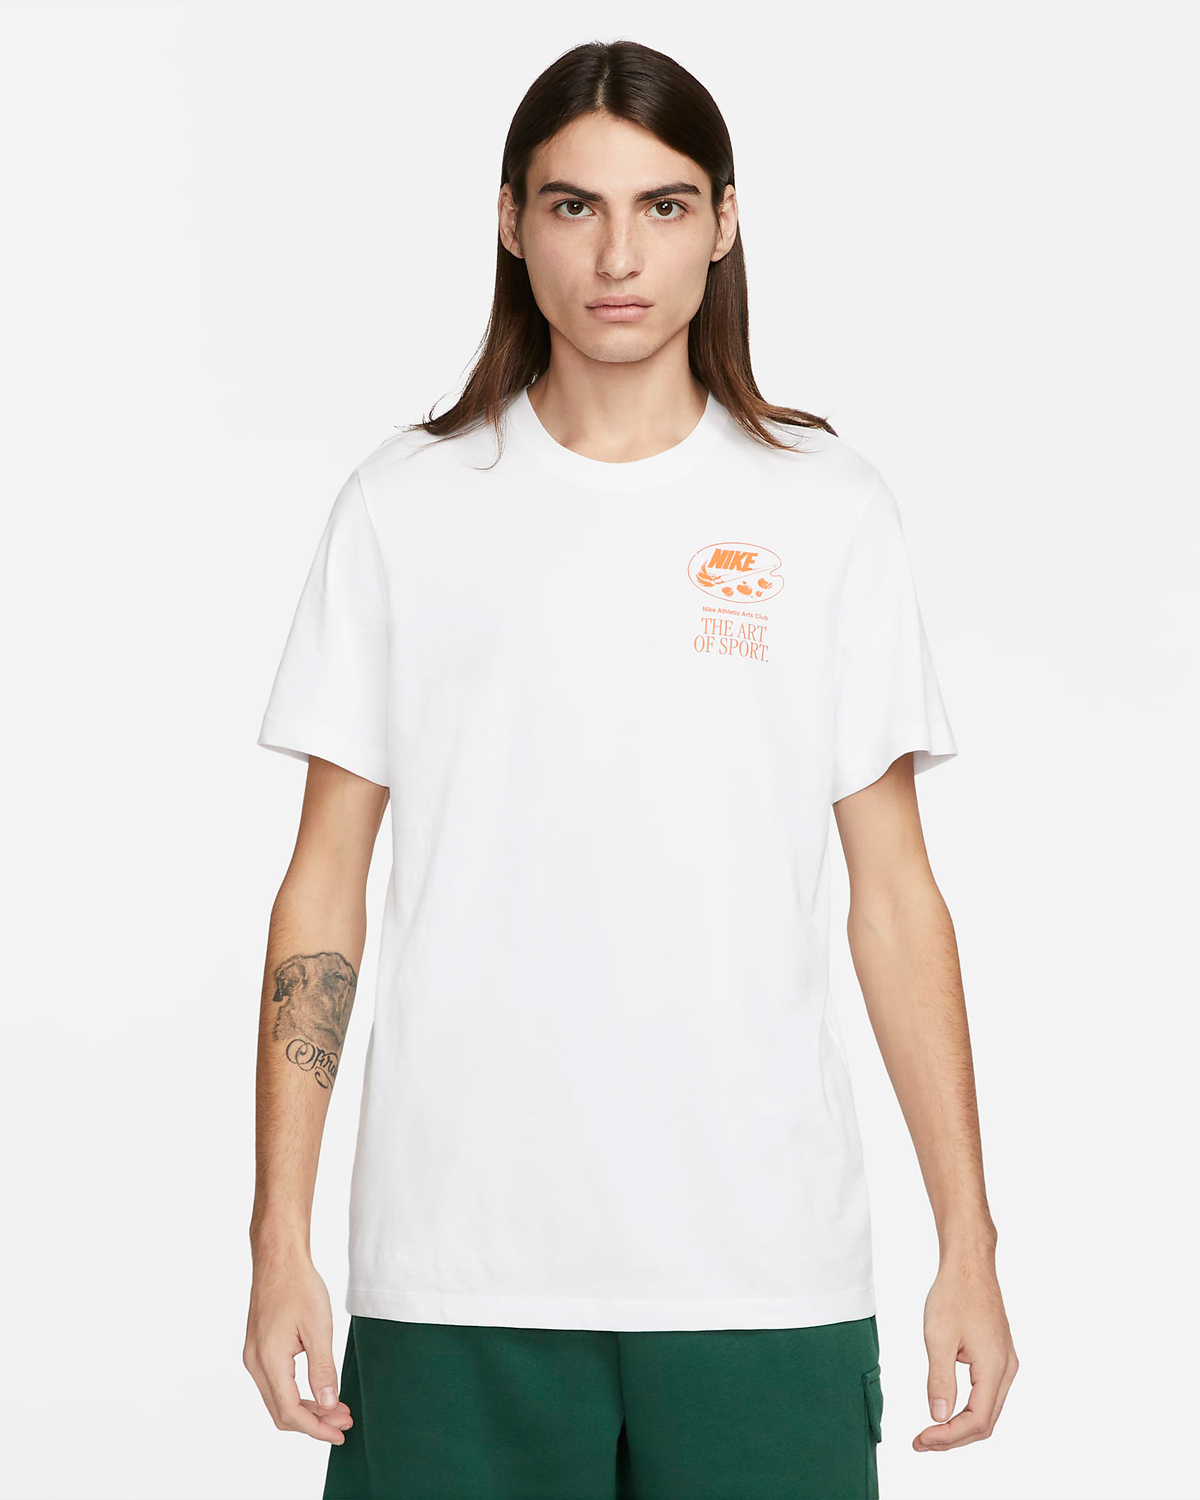 Nike-Art-of-Sport-T-Shirt-White-Orange-1